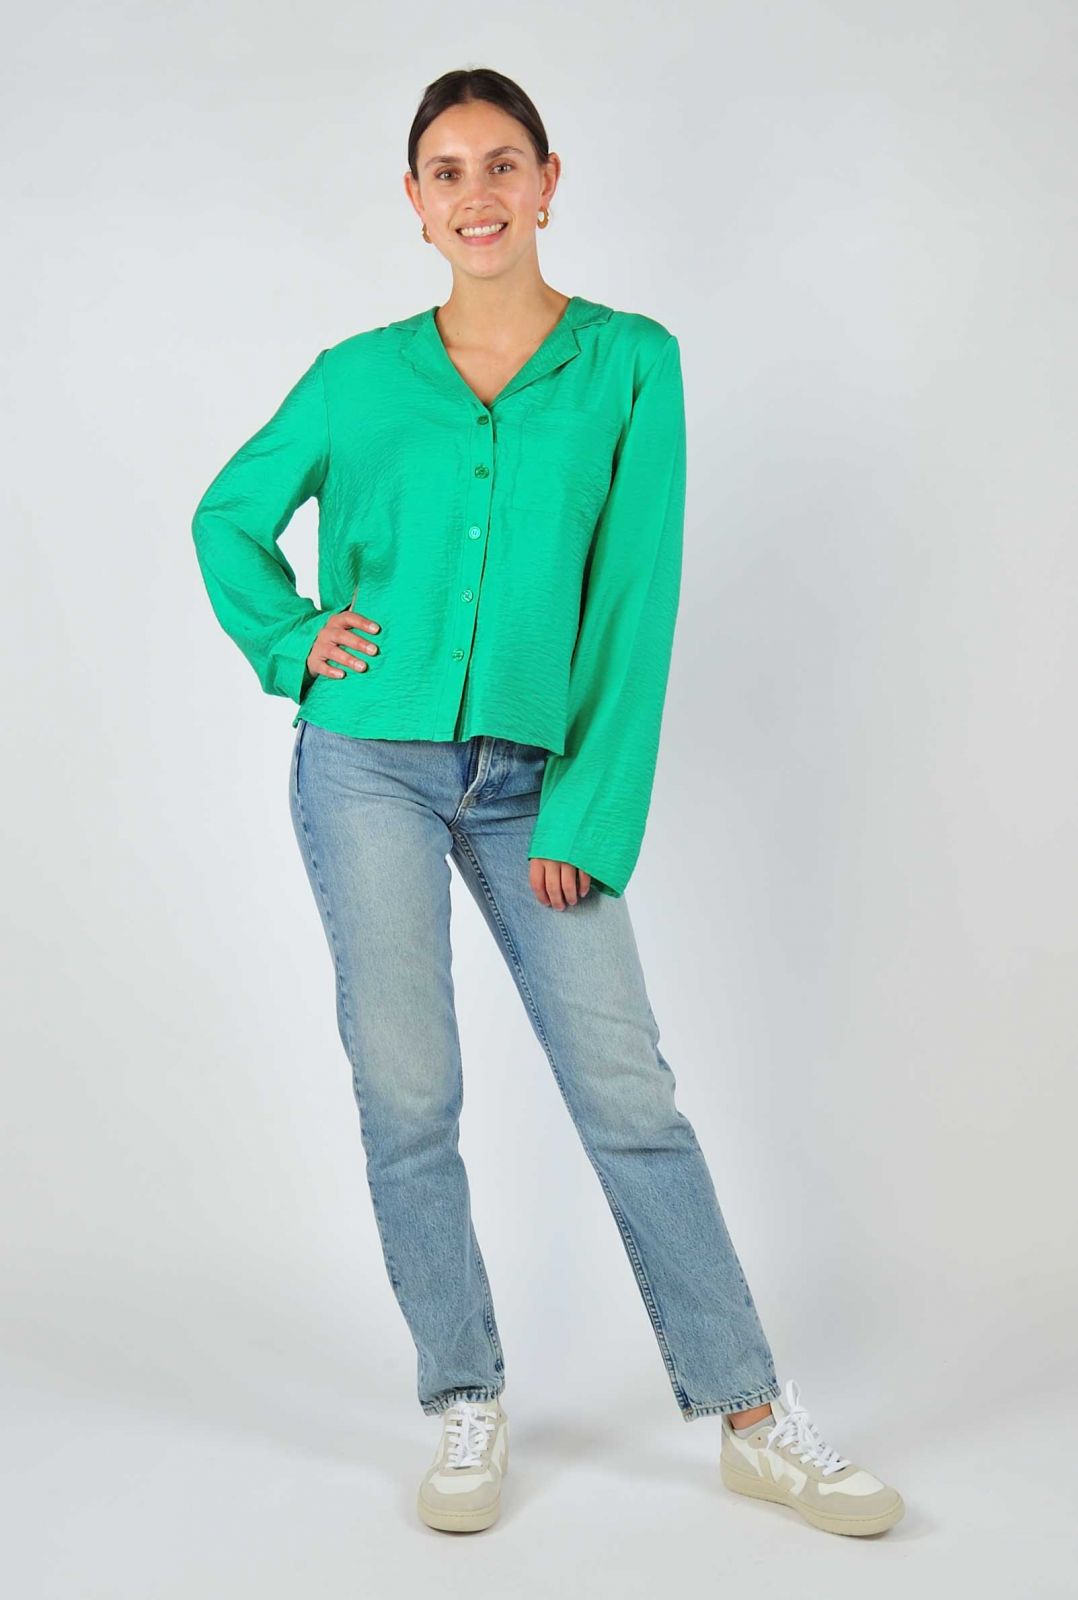 Sinewi is meer dan Fruit groente groene glanzende blouse met trompetmouwen ganna-m | Tally-ho